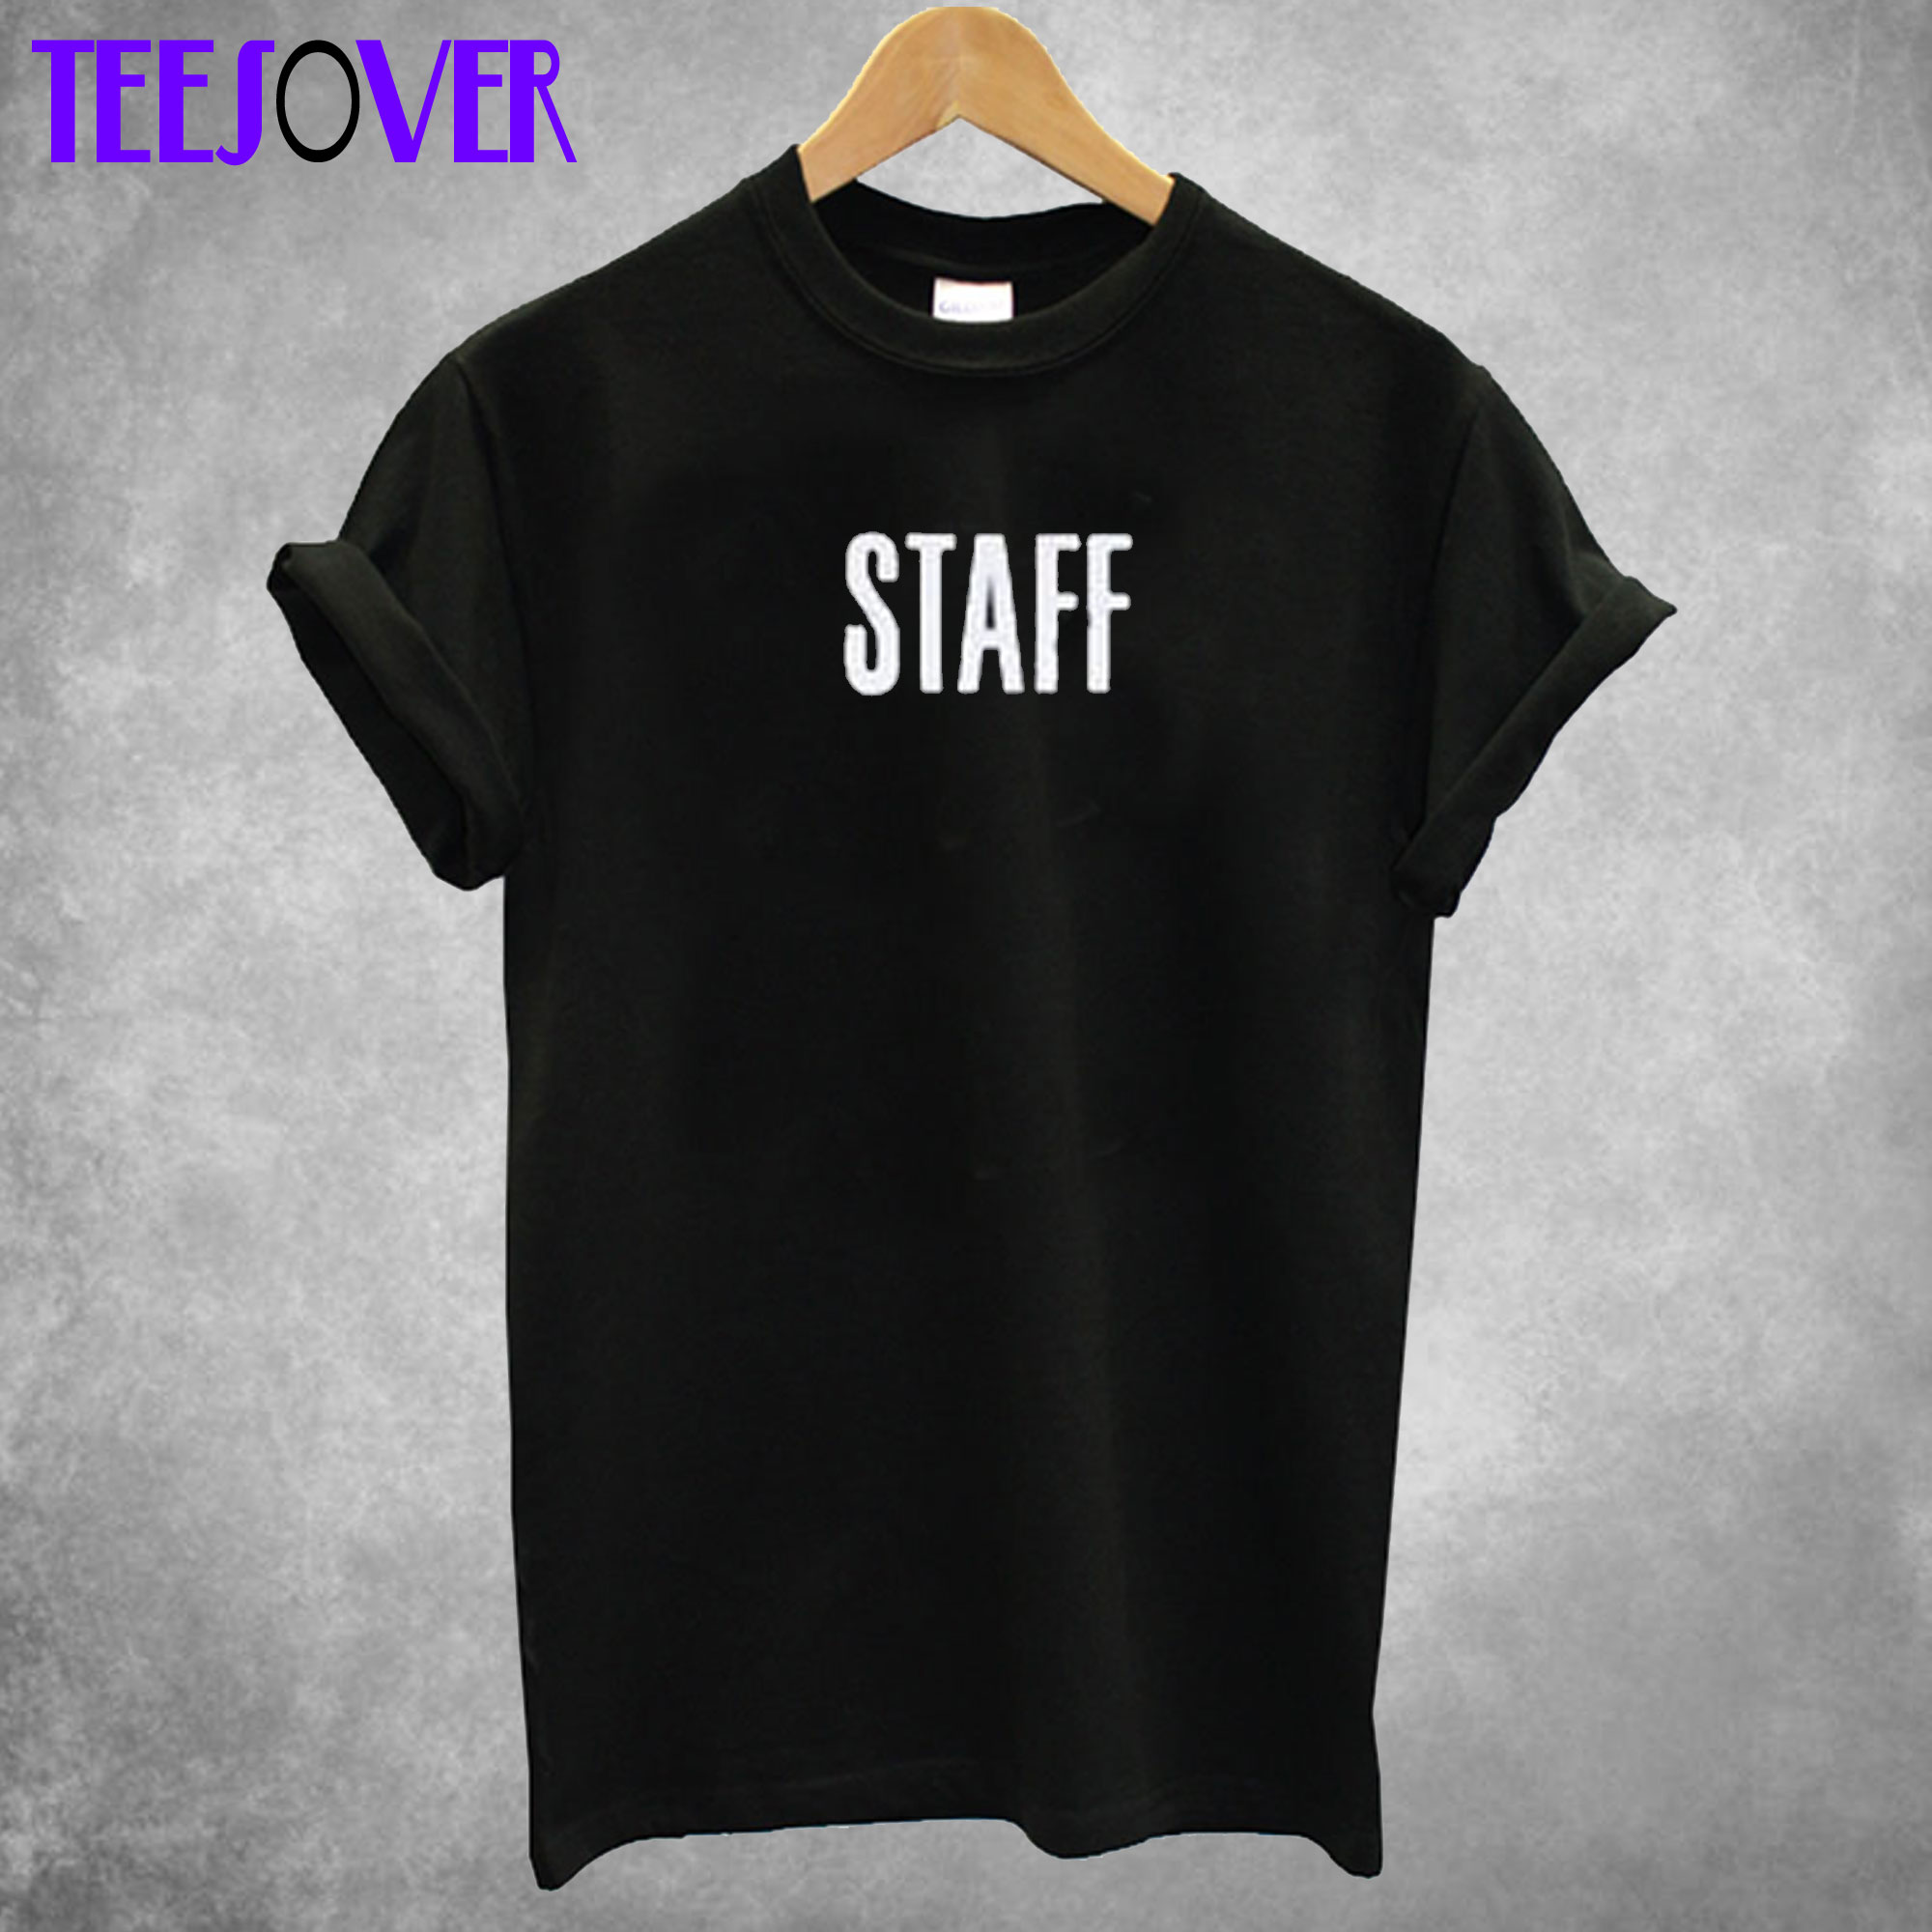 vetements staff t-shirt